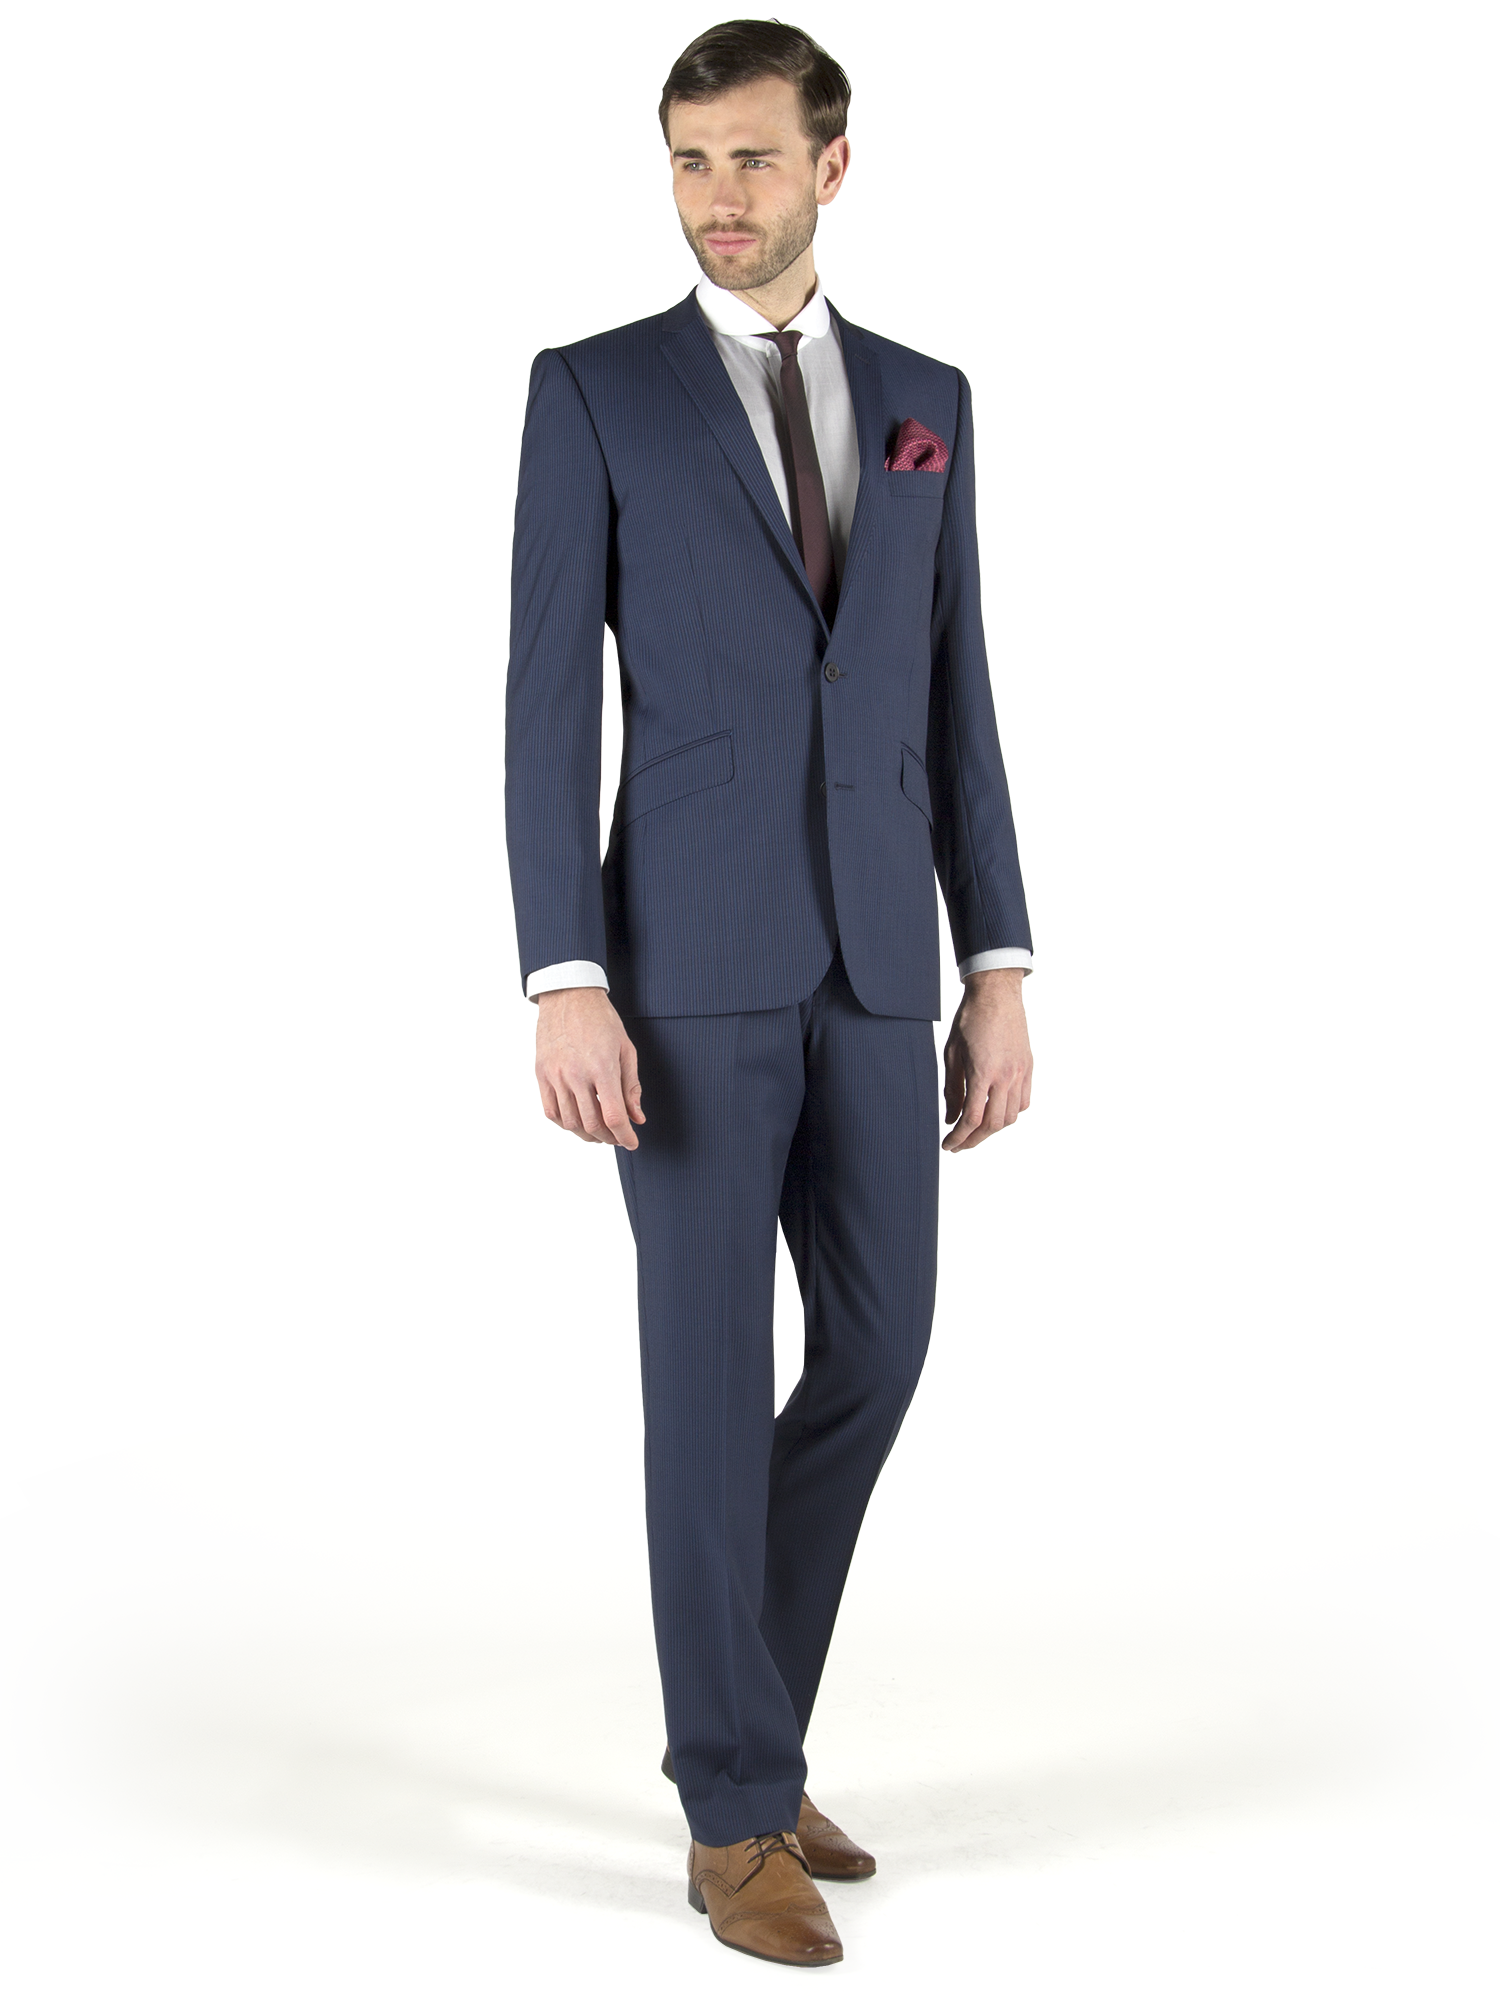 Formal Suit PNG Image